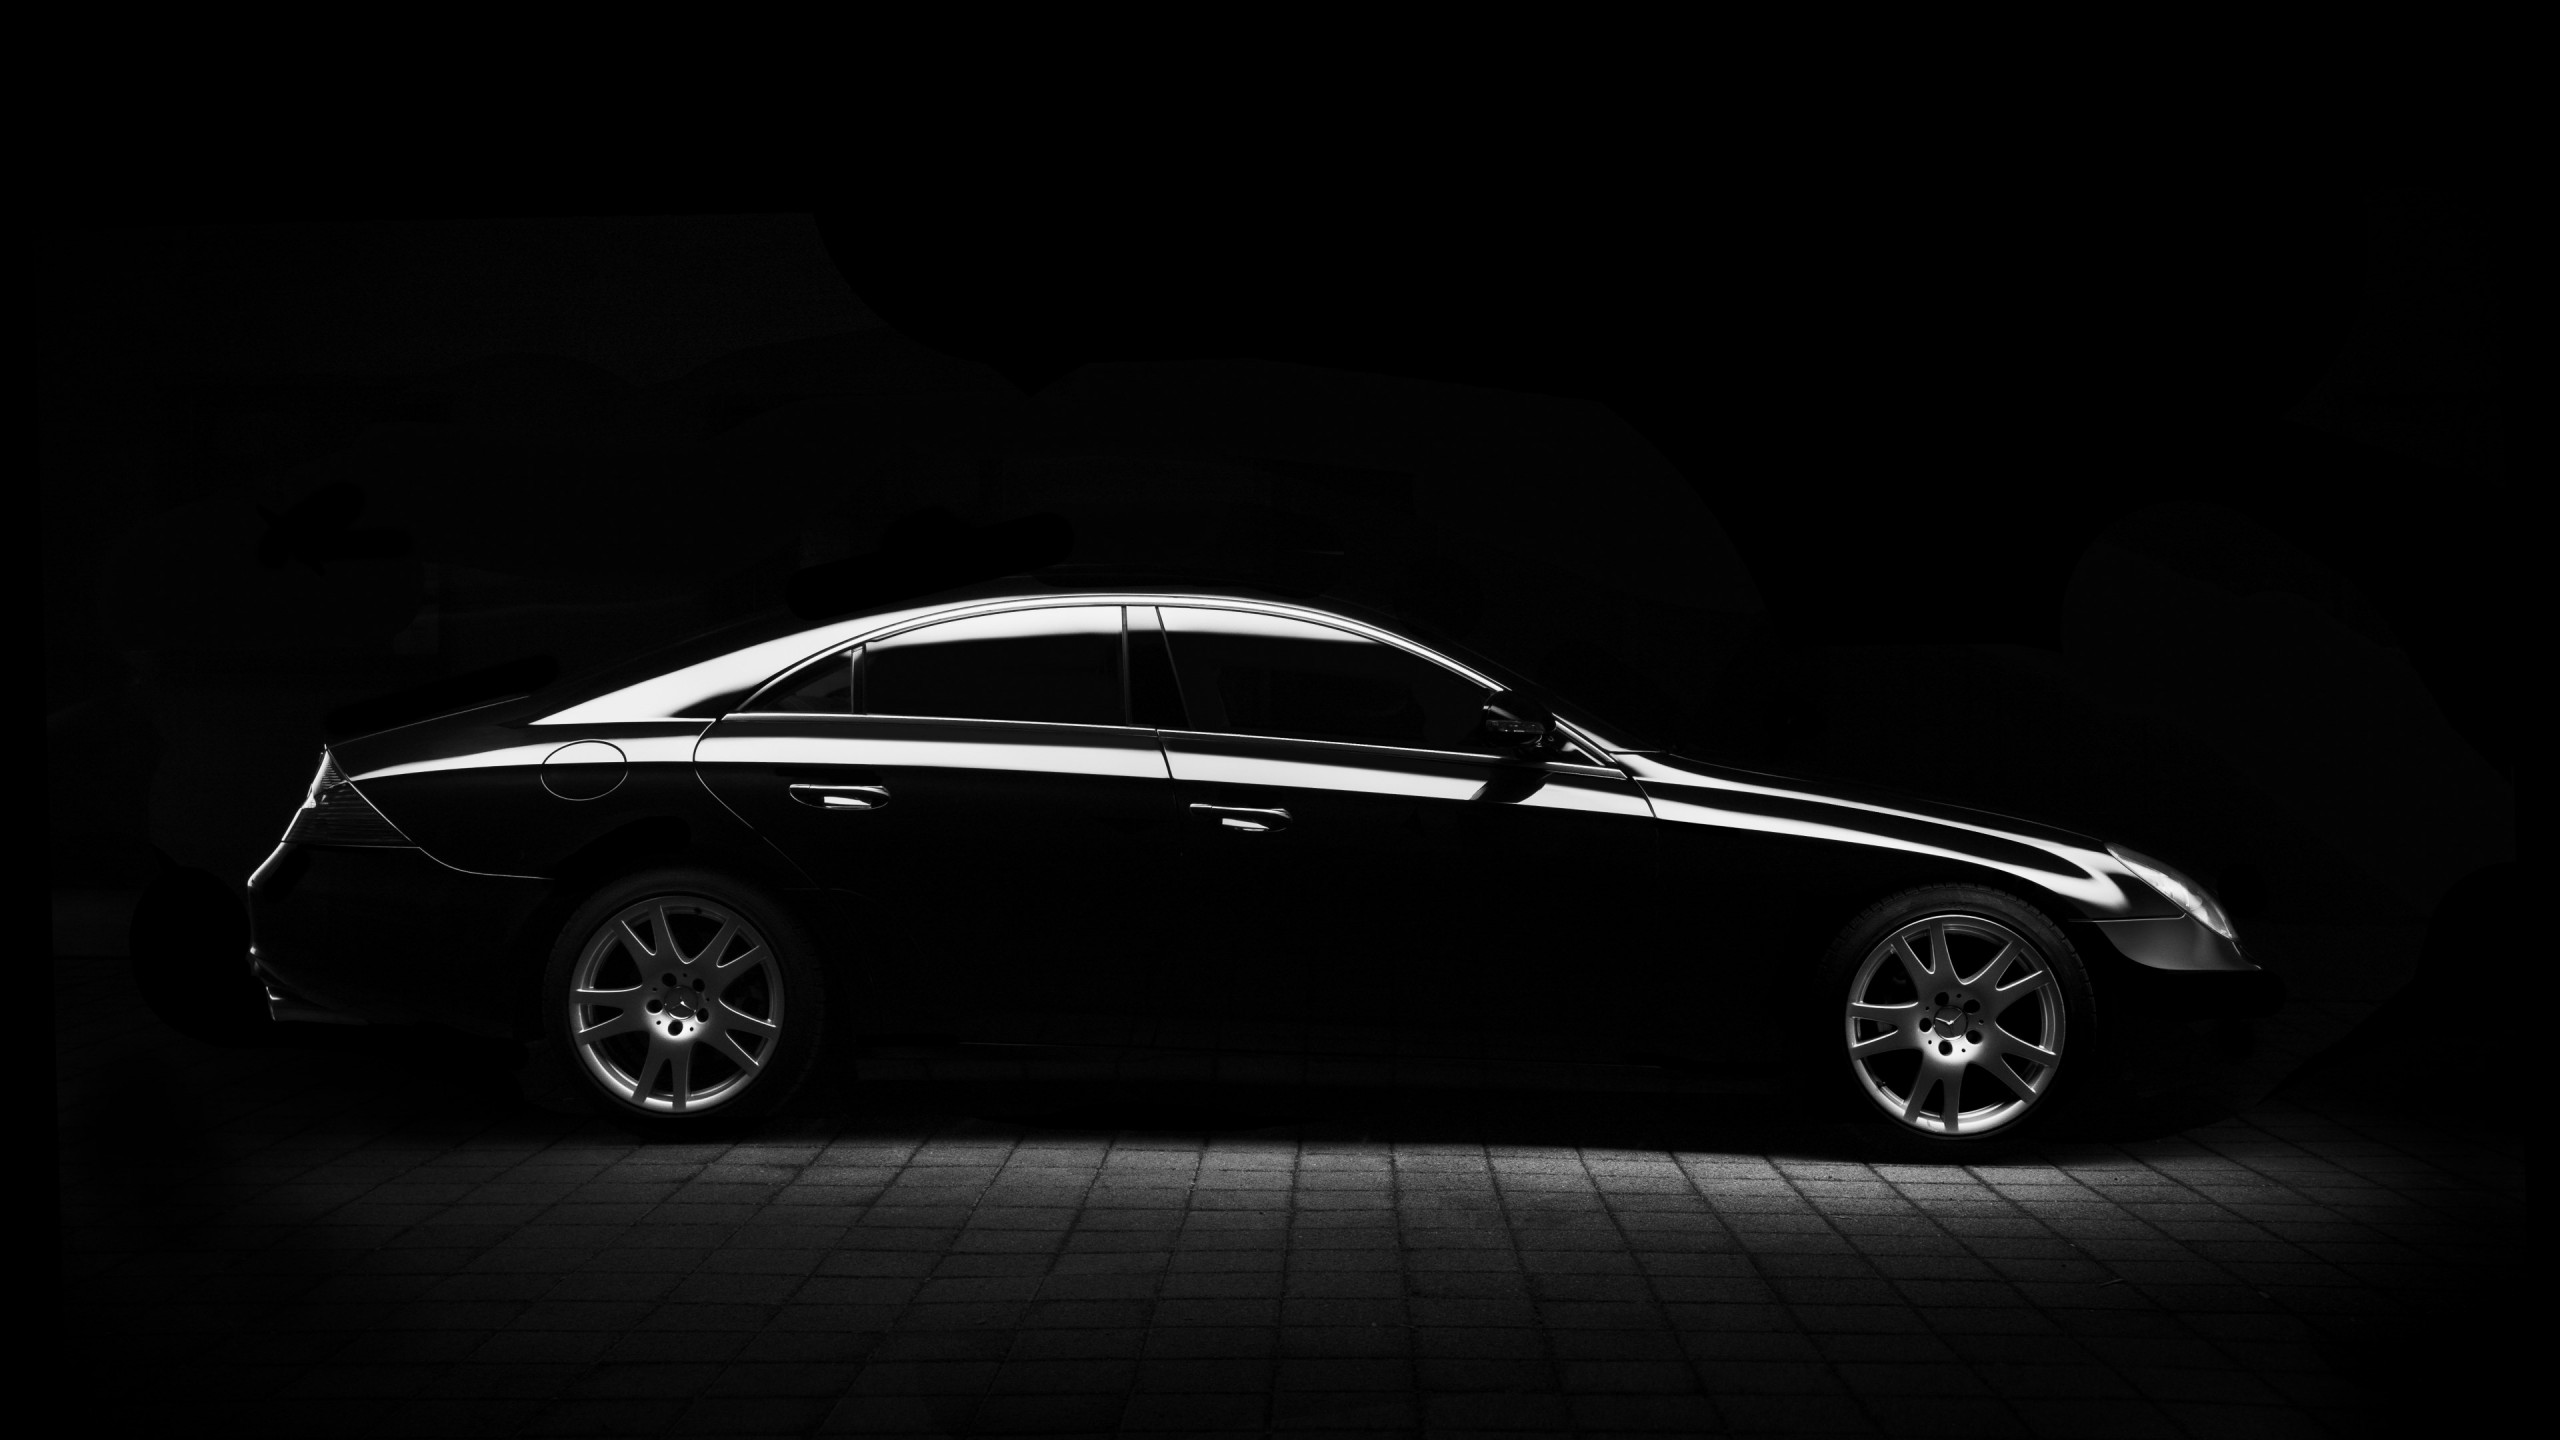 Silhouette of a Mercedes car wallpaper 2560x1440